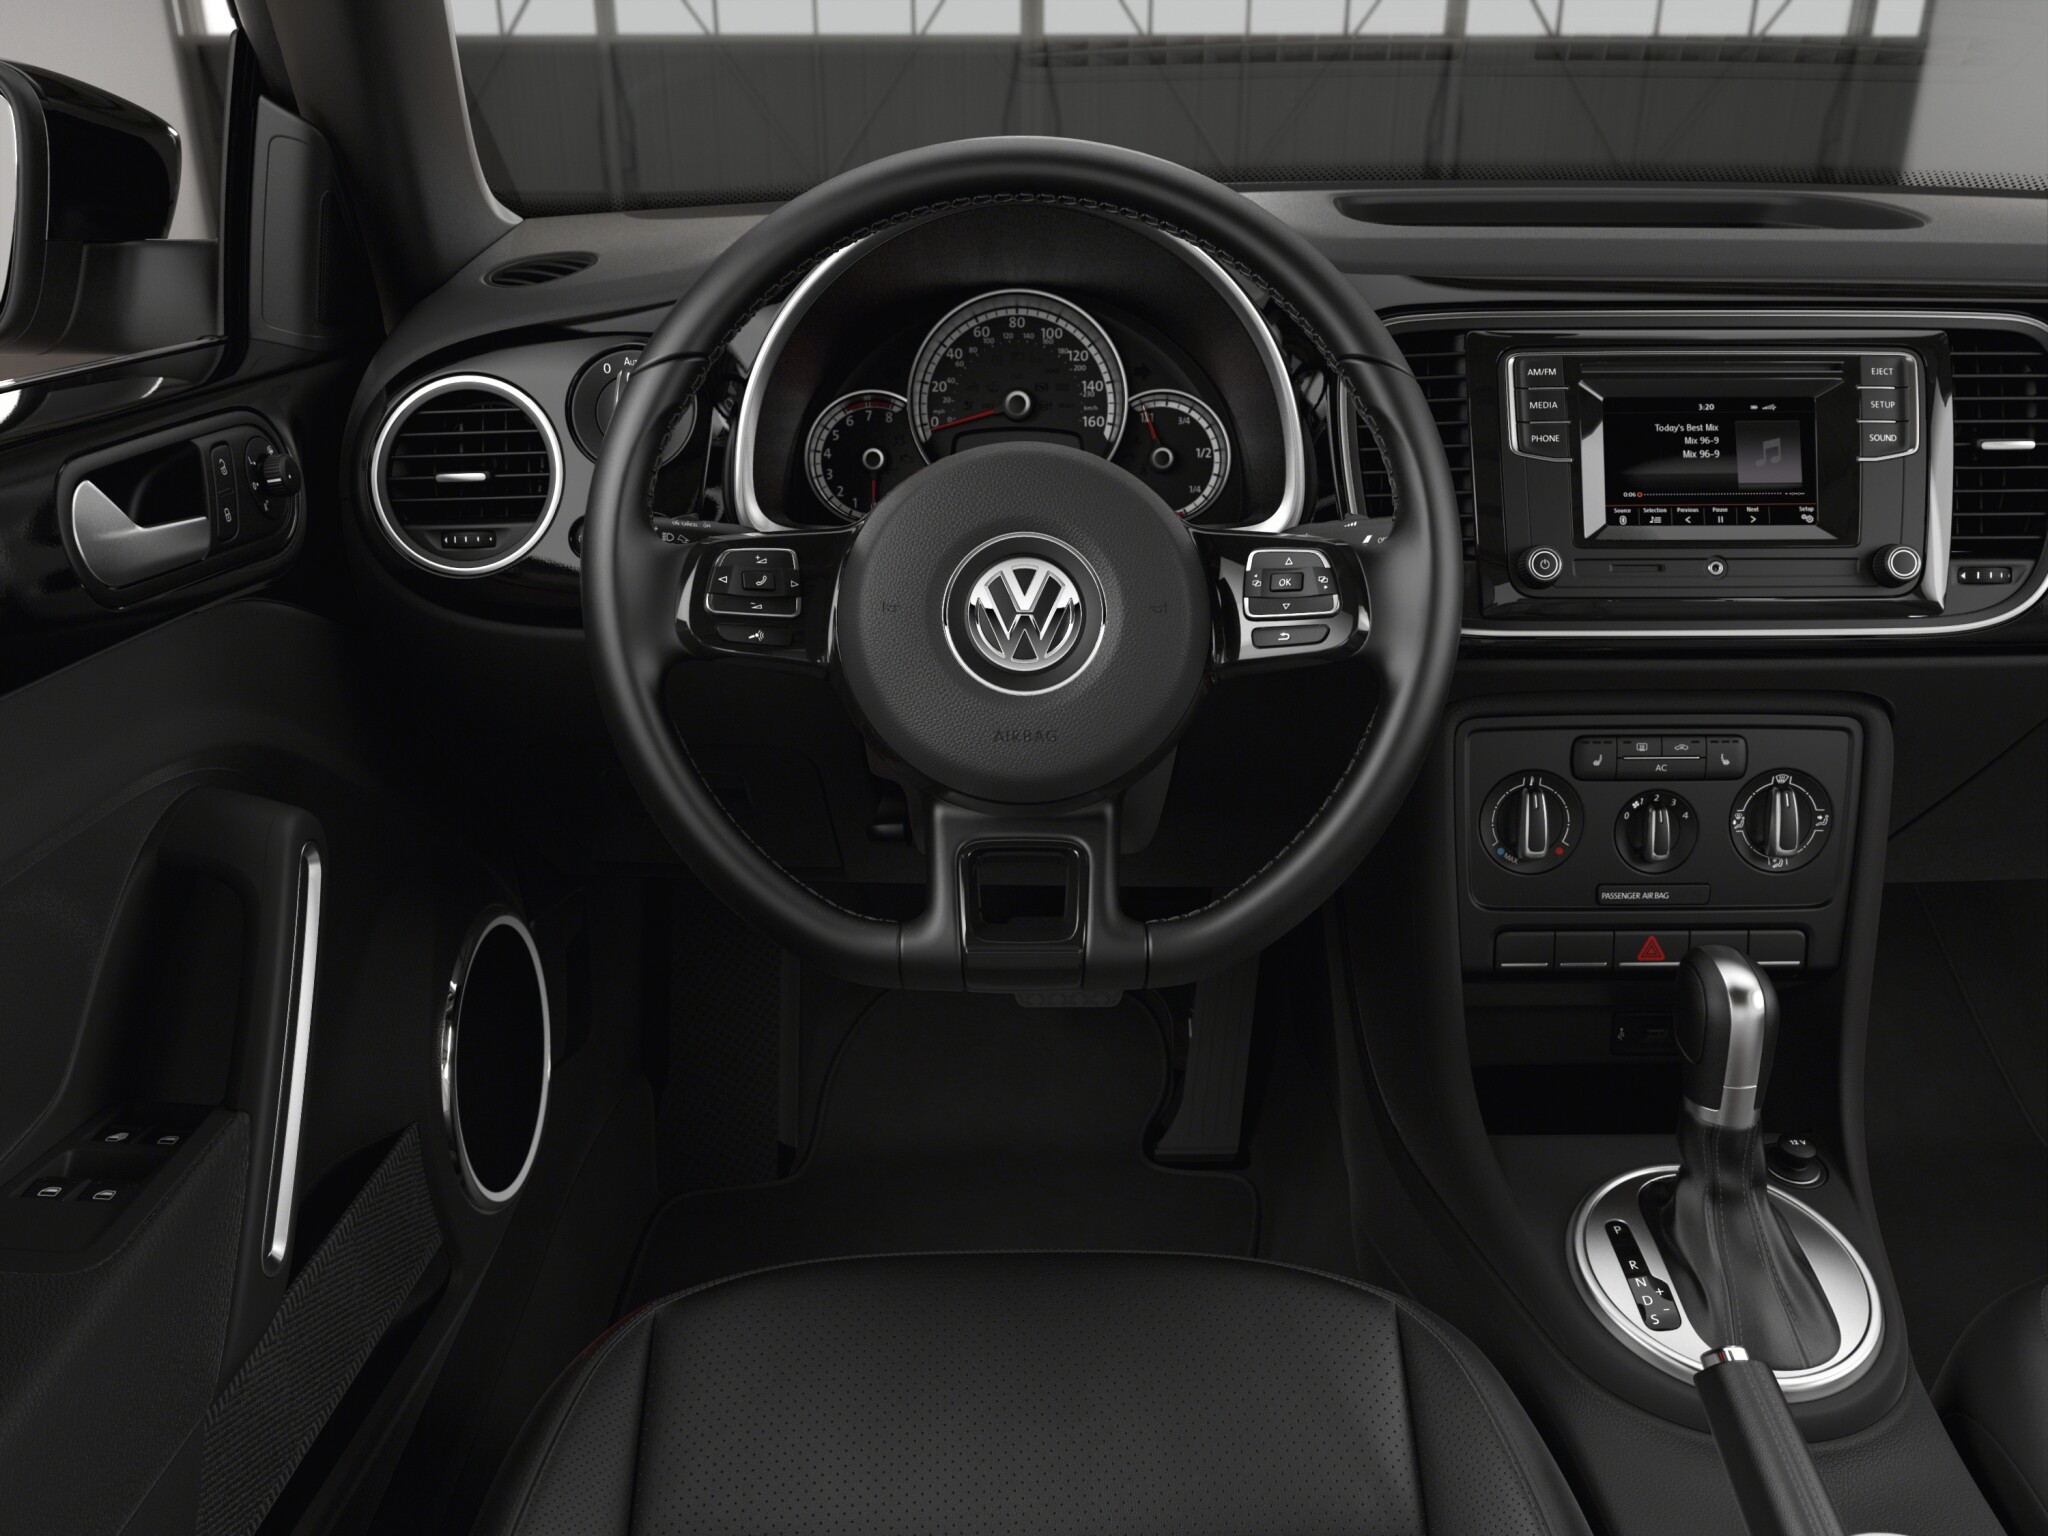 Volkswagen Beetle Convertinble 1.8T SE interior front dashboard view